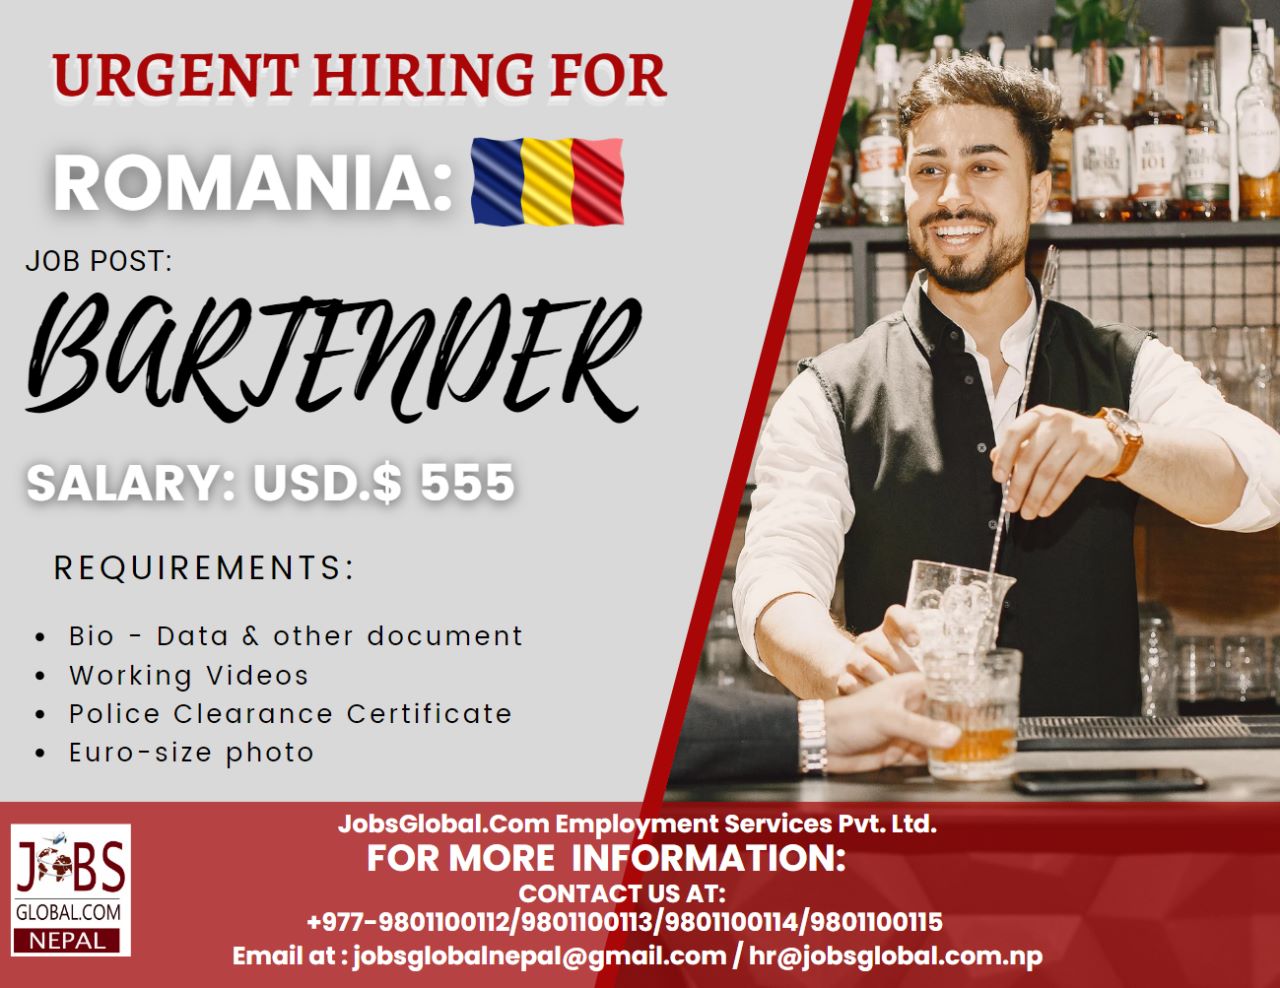 Job Demand From Romania, Job Vacancy for Romania From JobsGlobal. Com Employment NEPAL - Bartender job in Romania